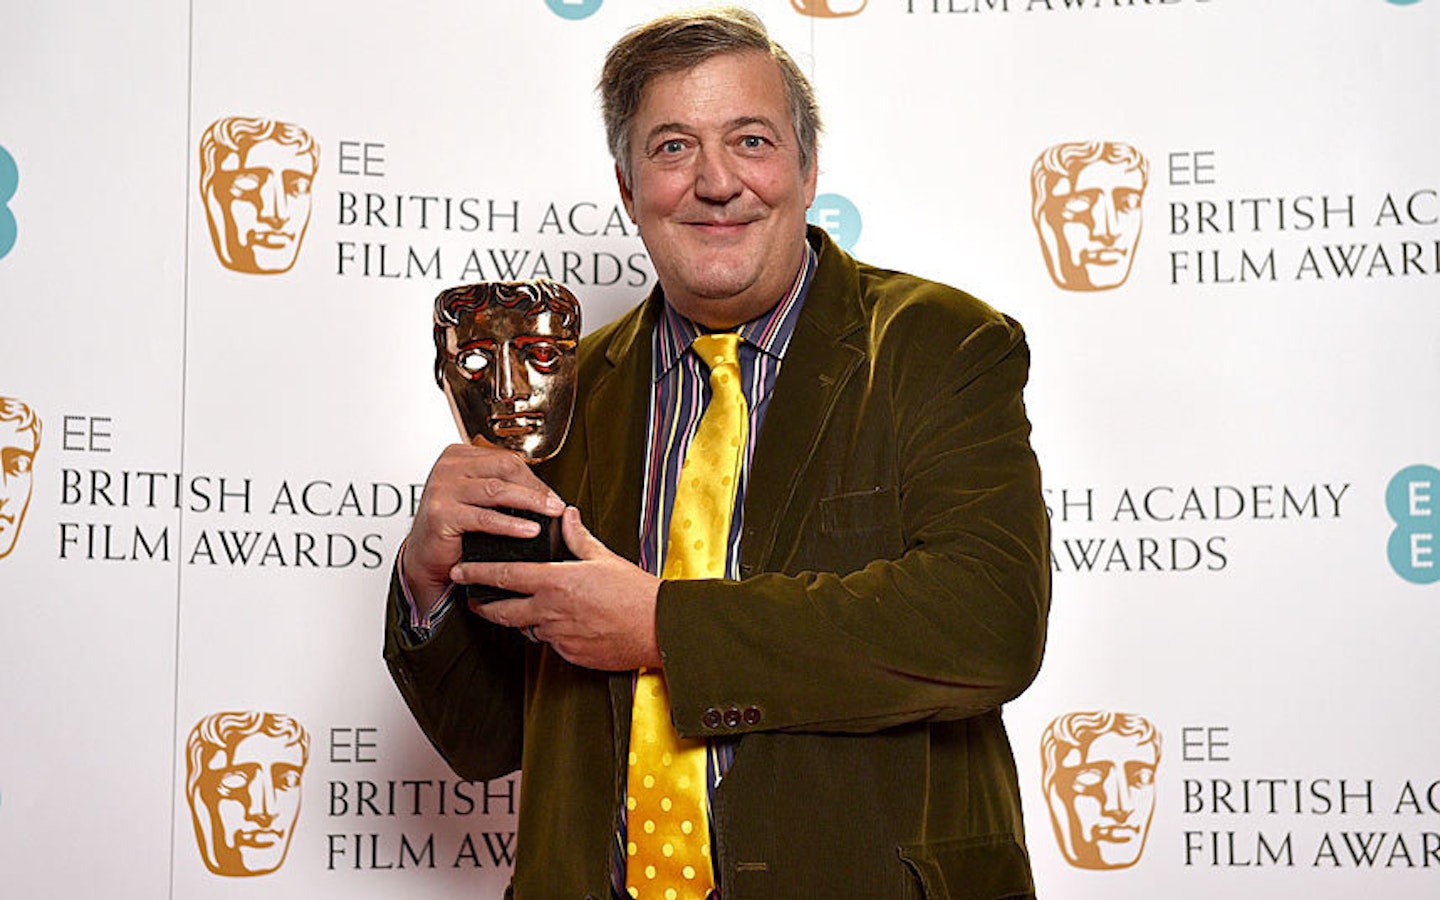 BAFTAs 2015: The Winners In Full